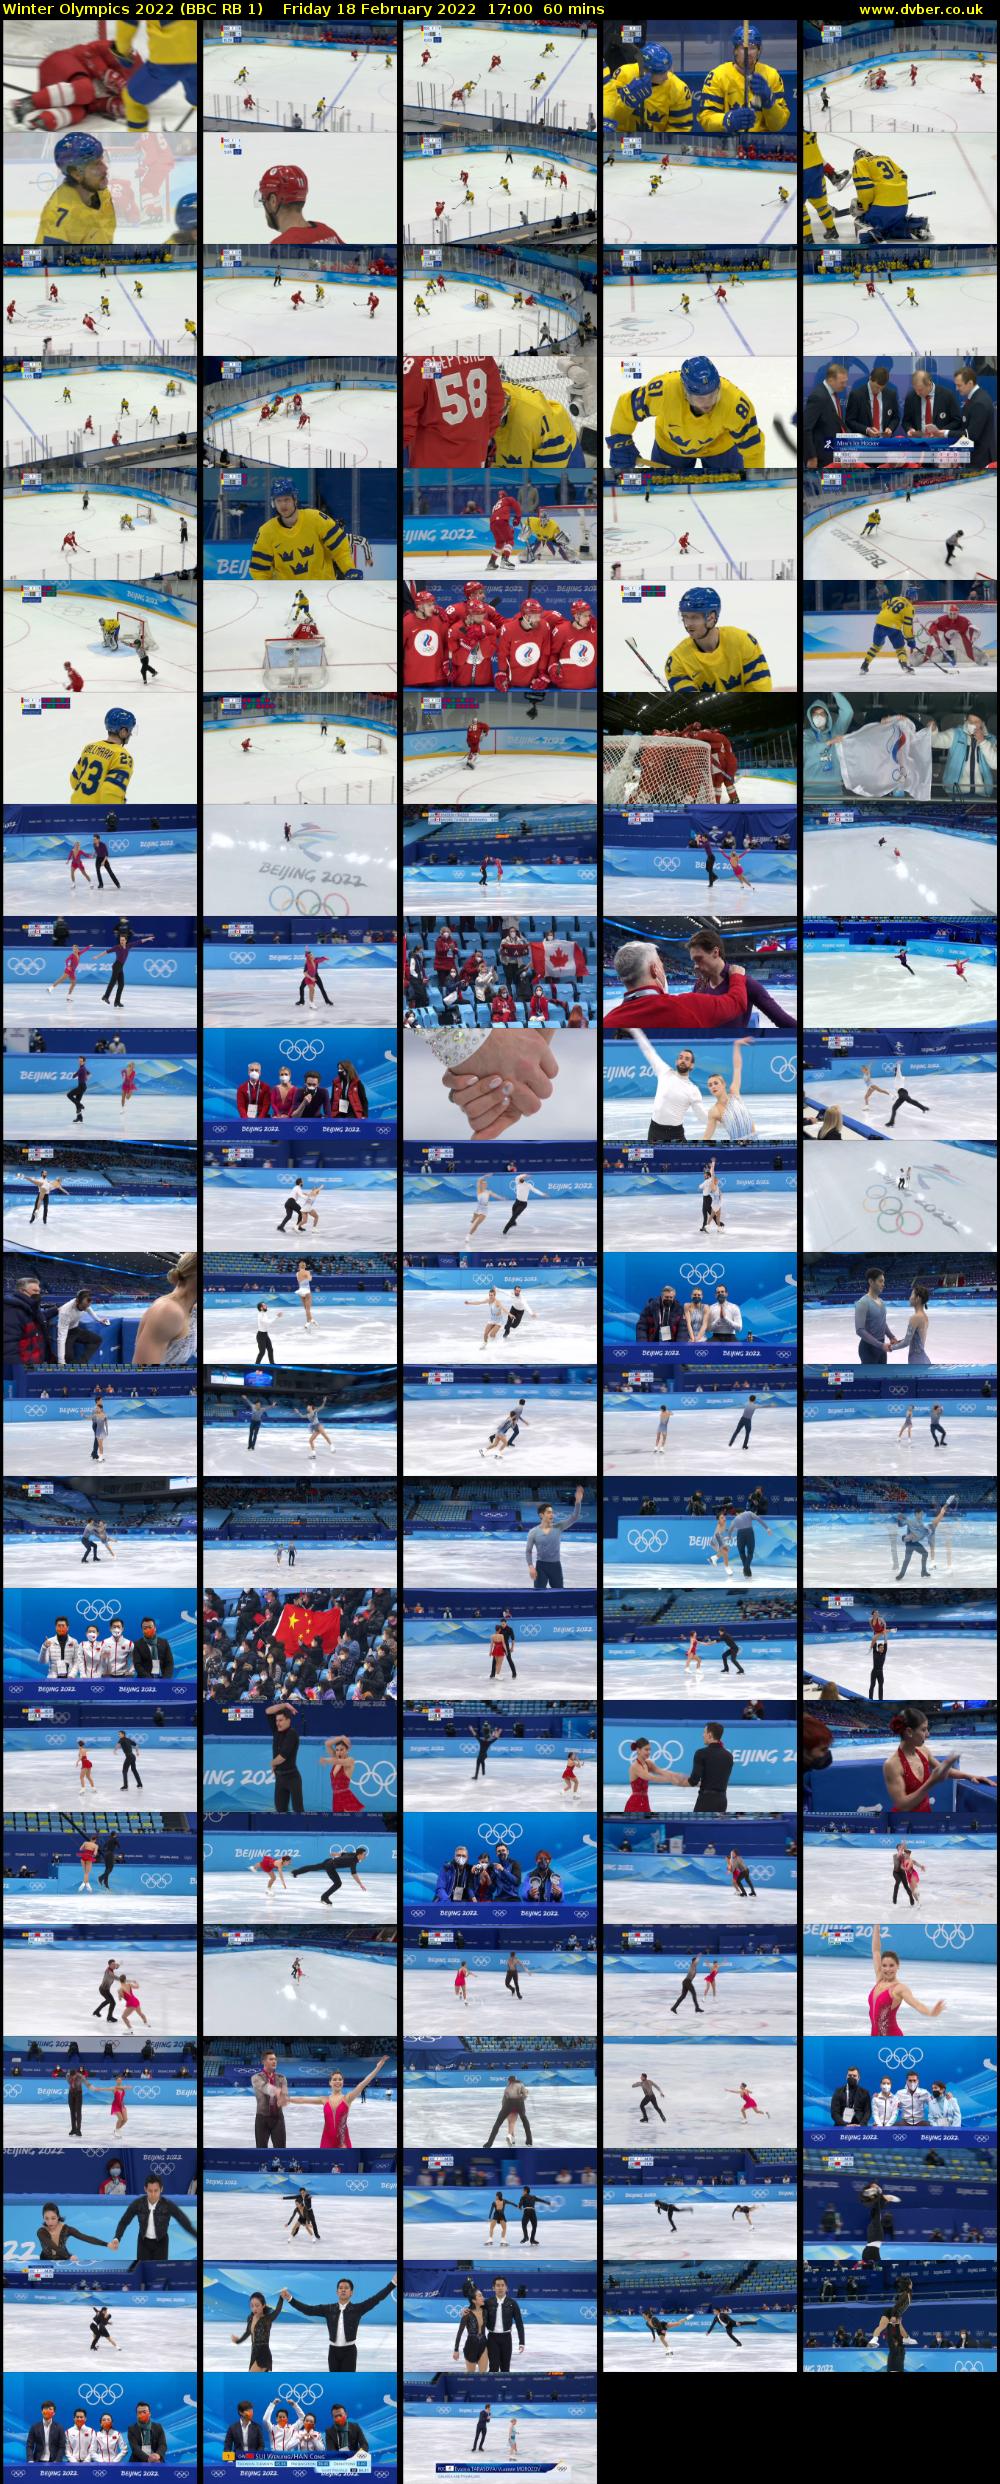 Winter Olympics 2022 (BBC RB 1) Friday 18 February 2022 17:00 - 18:00